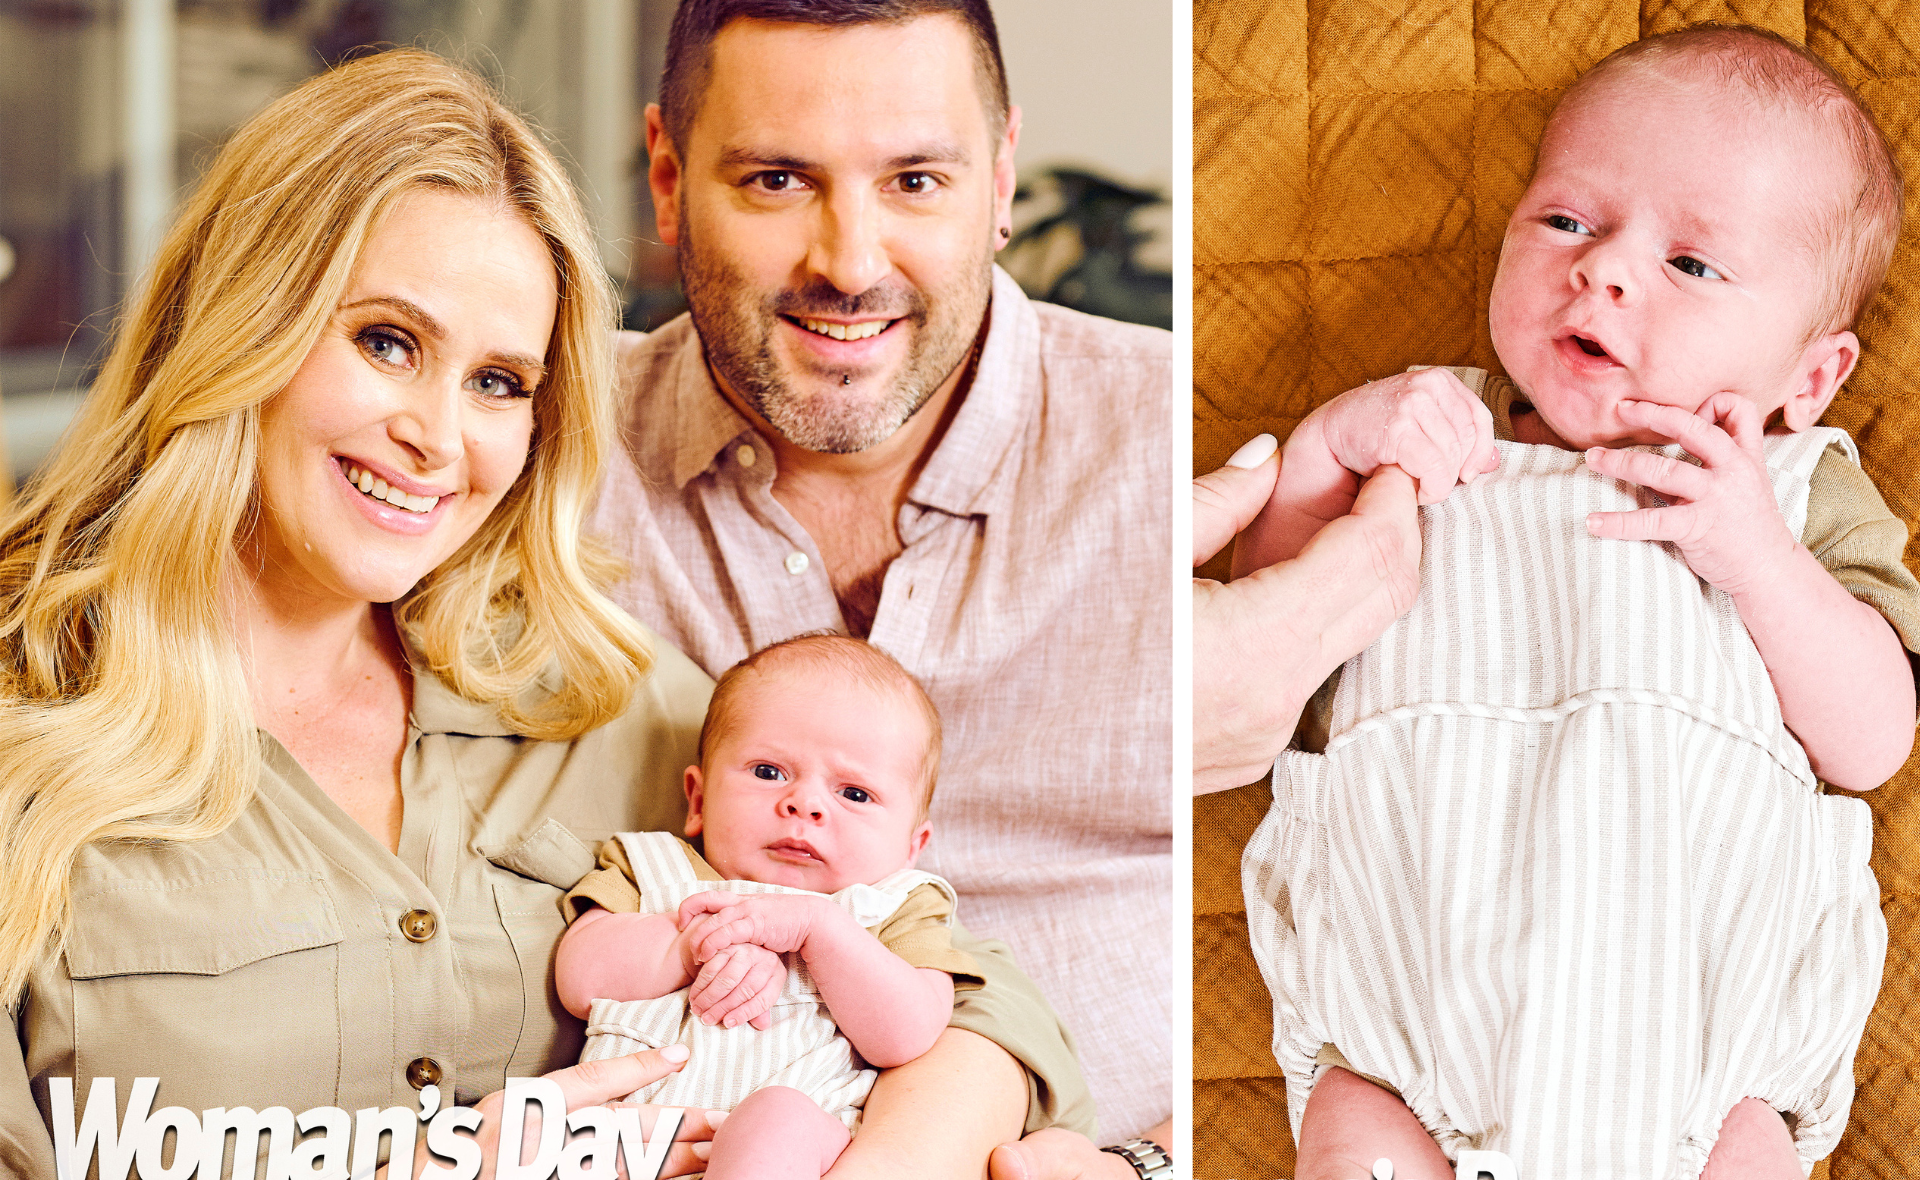 “I had a tear in my eye”: Australian Idol’s Kate DeAraugo talks on motherhood with her newborn